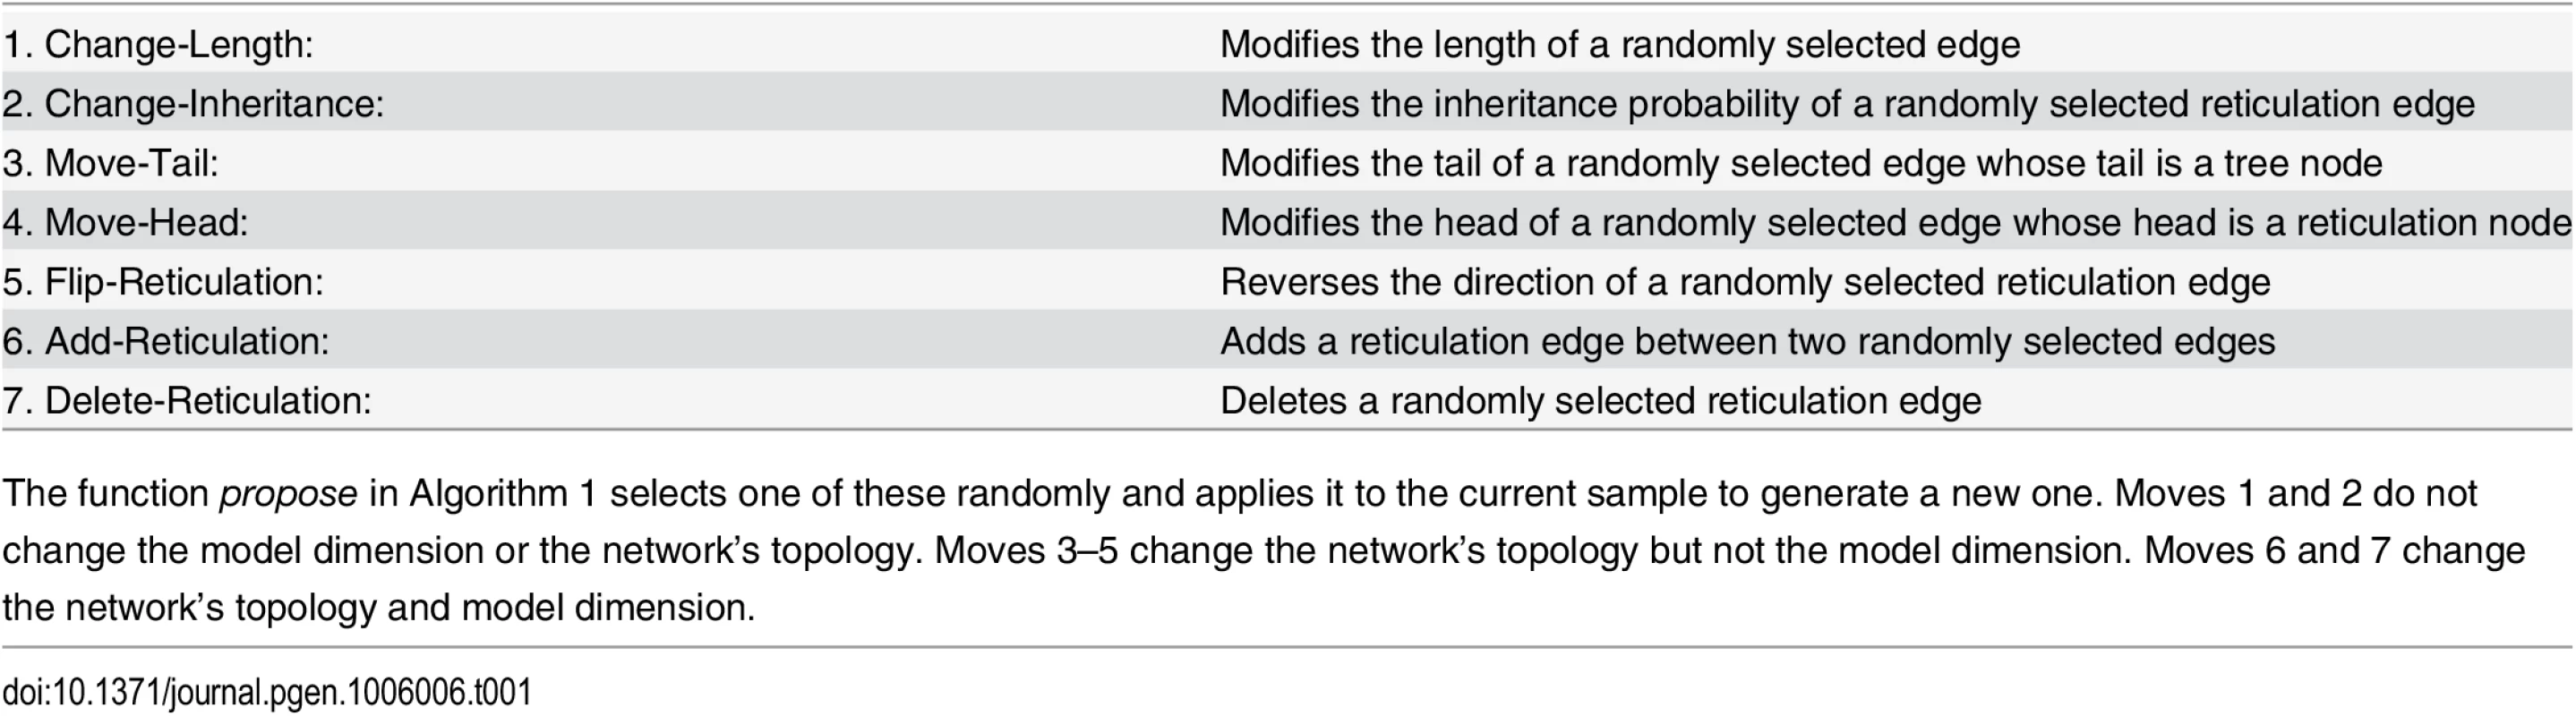 The 7 moves that the Metropolis-Hastings algorithm employs.